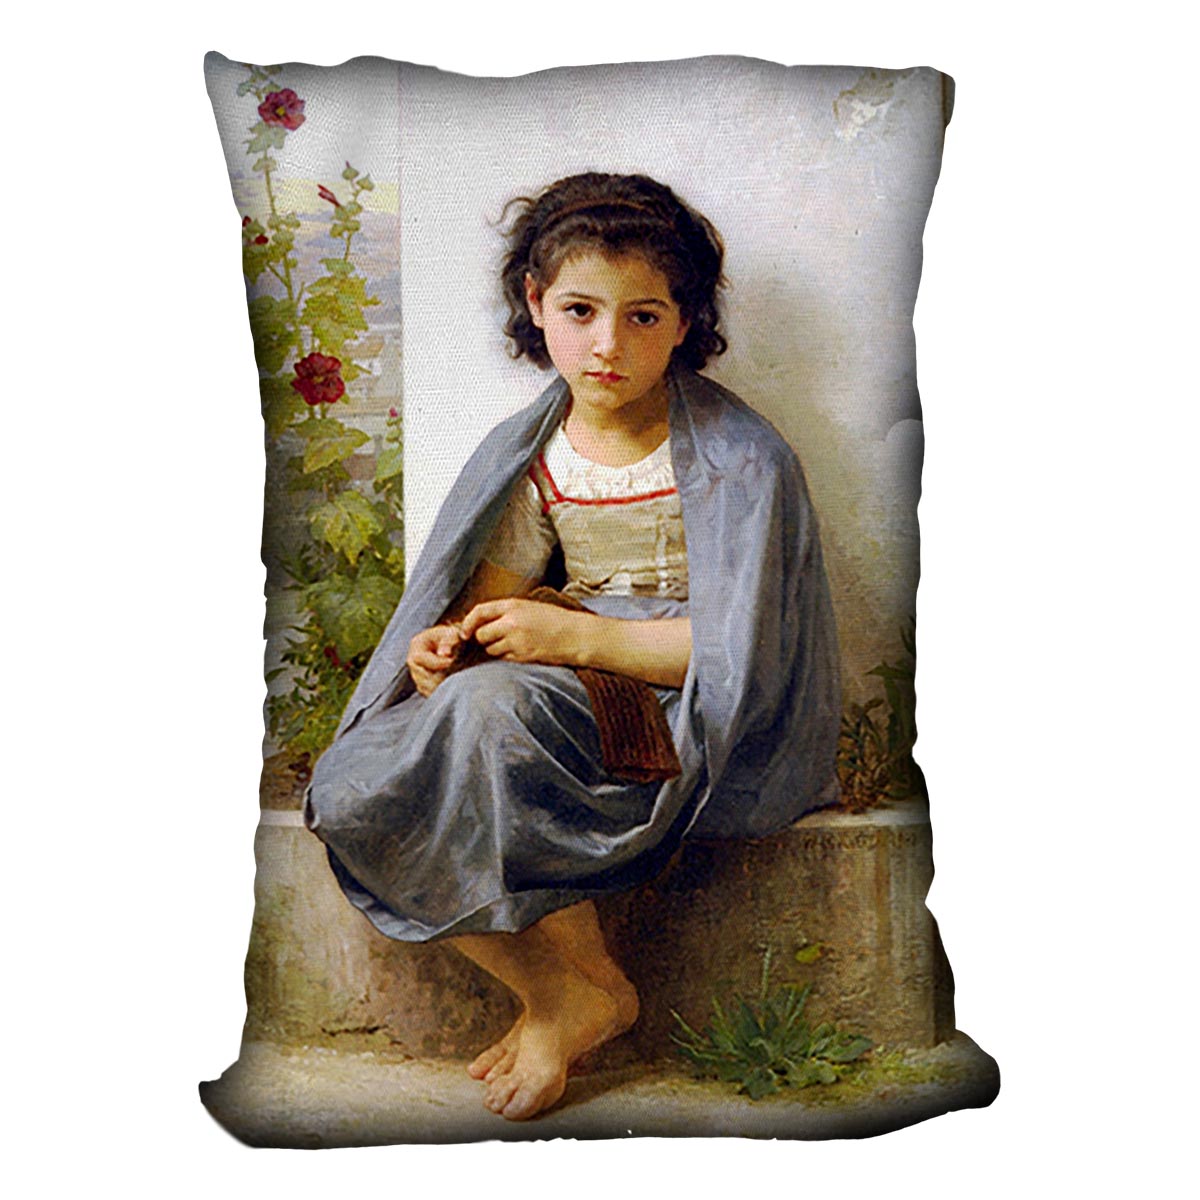 The Little Knitter By Bouguereau Cushion